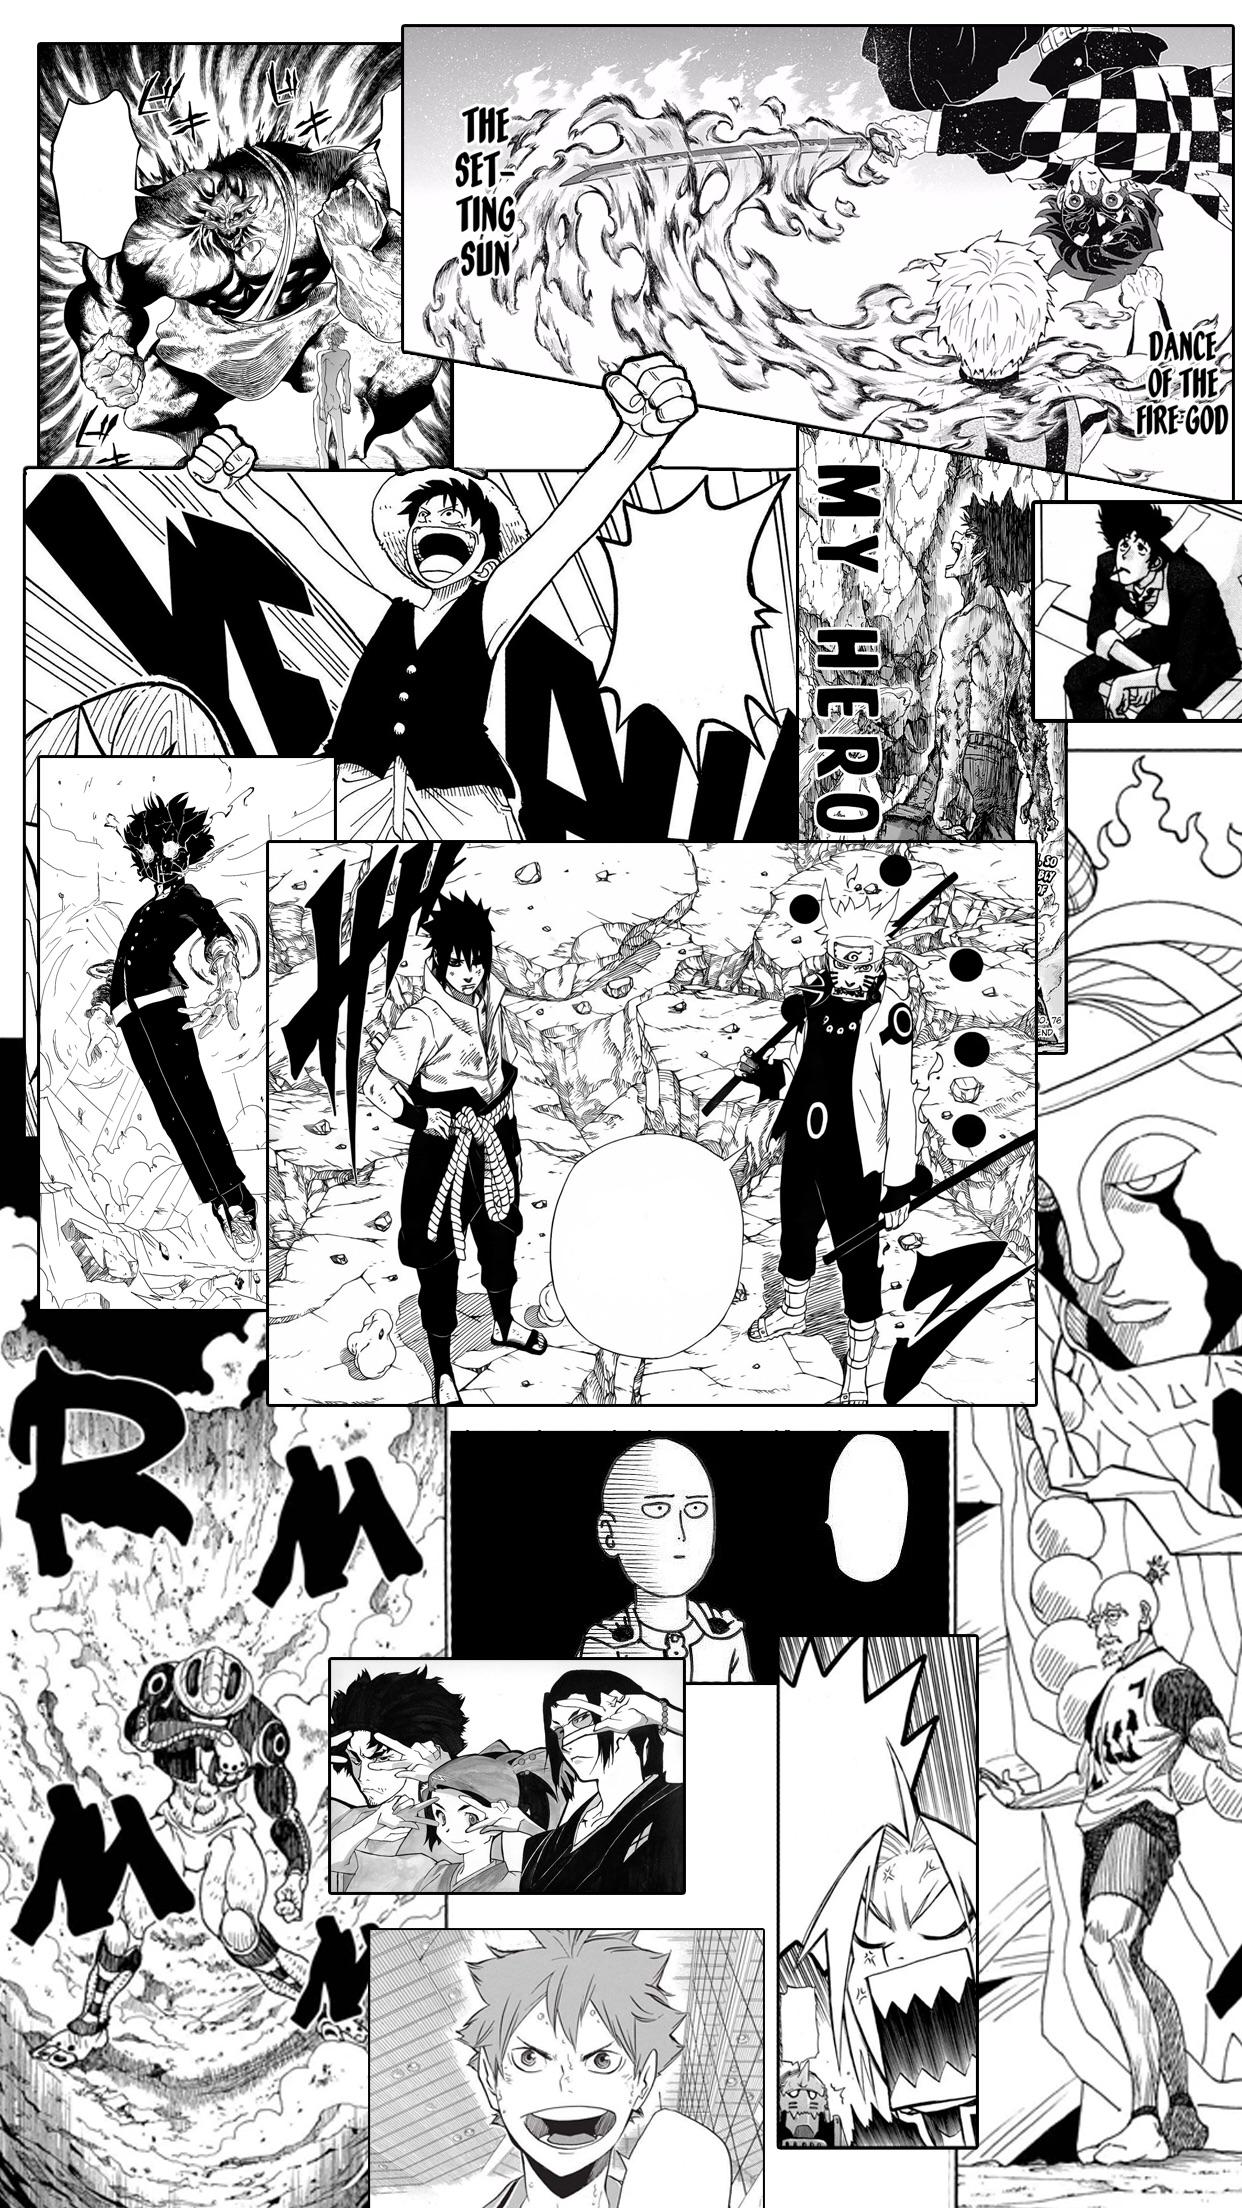 Manga Panel iPhone Wallpapers - Wallpaper Cave